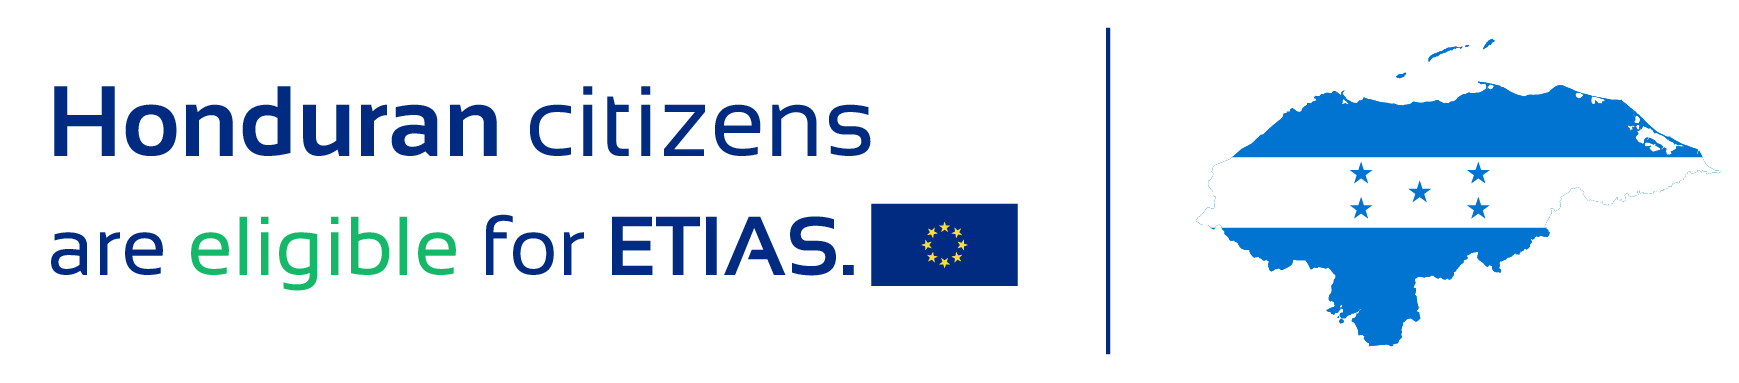 Honduran citizens are eligible for ETIAS